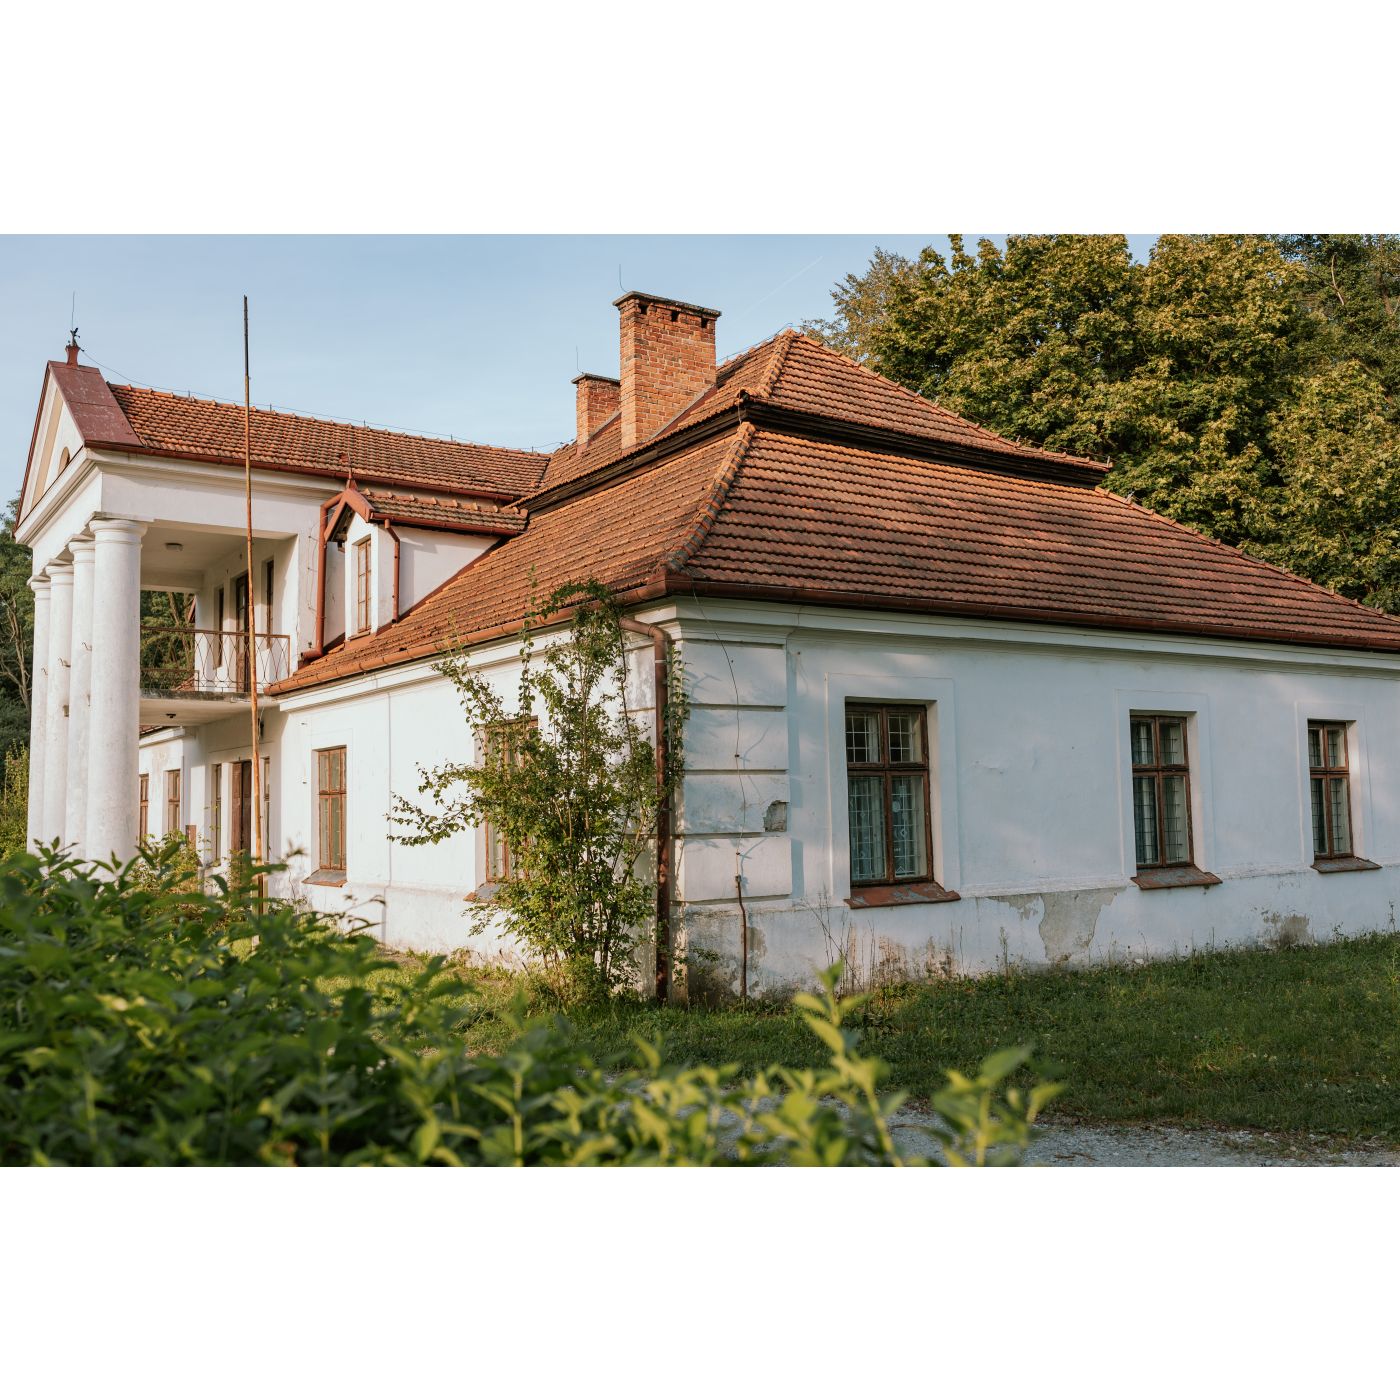 Manor house in Korzeniów